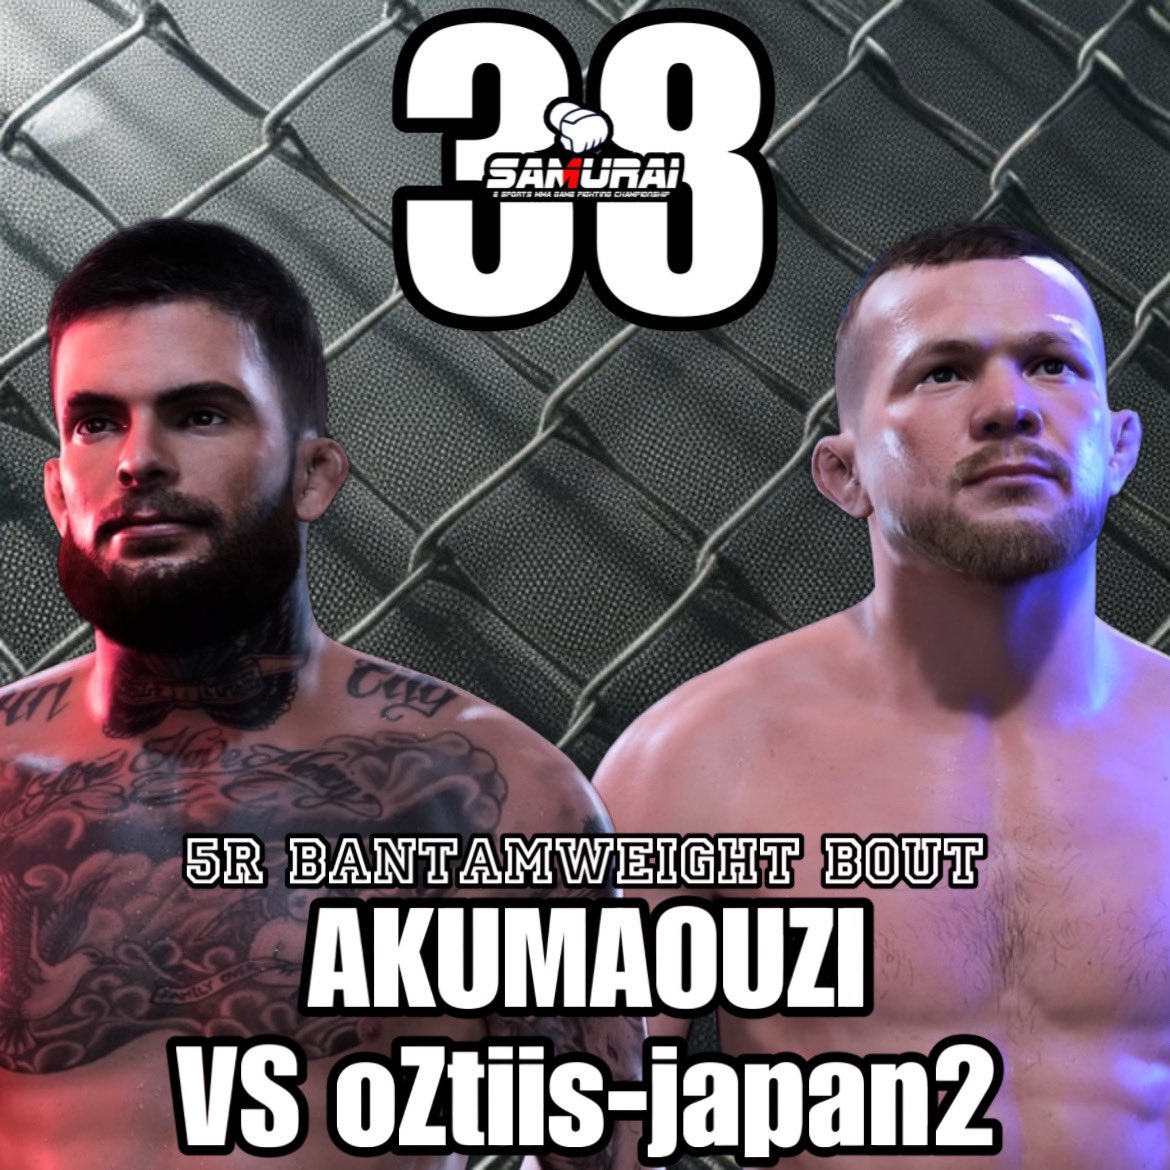 <FIGHT CARD>

#SAMURAI38

MAIN EVENT
5R Bantamweight Bout 

#3 @AkumaouziM 🇯🇵
🆚
#4 @oZtiis_fufu 🇯🇵

#ufc5
#UFC5
#SAMURAIUFC